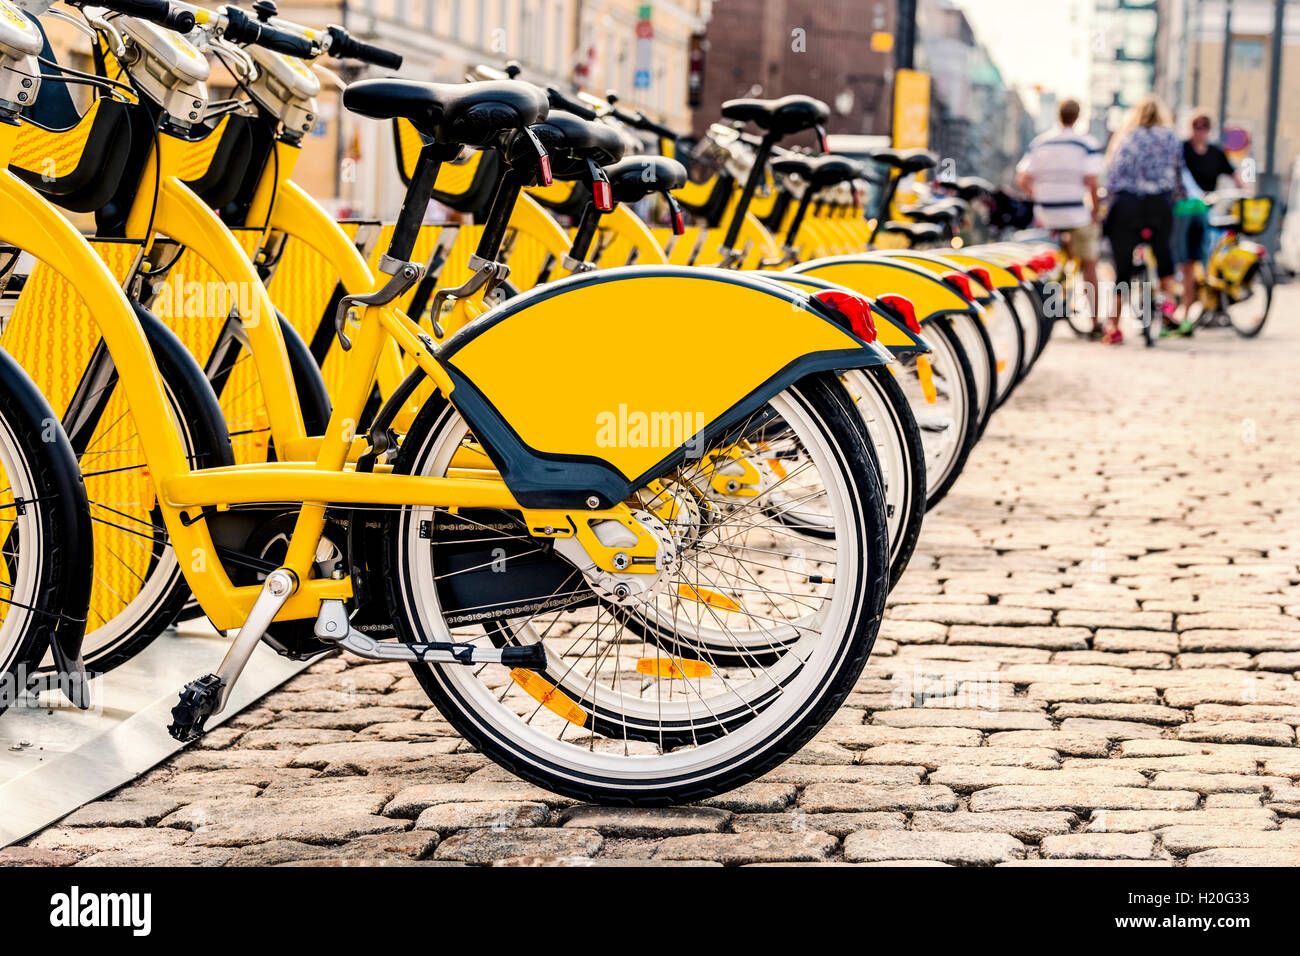 Finnland, Helsinki, Miet-Fahrräder, City-bikes Stockfotografie - Alamy